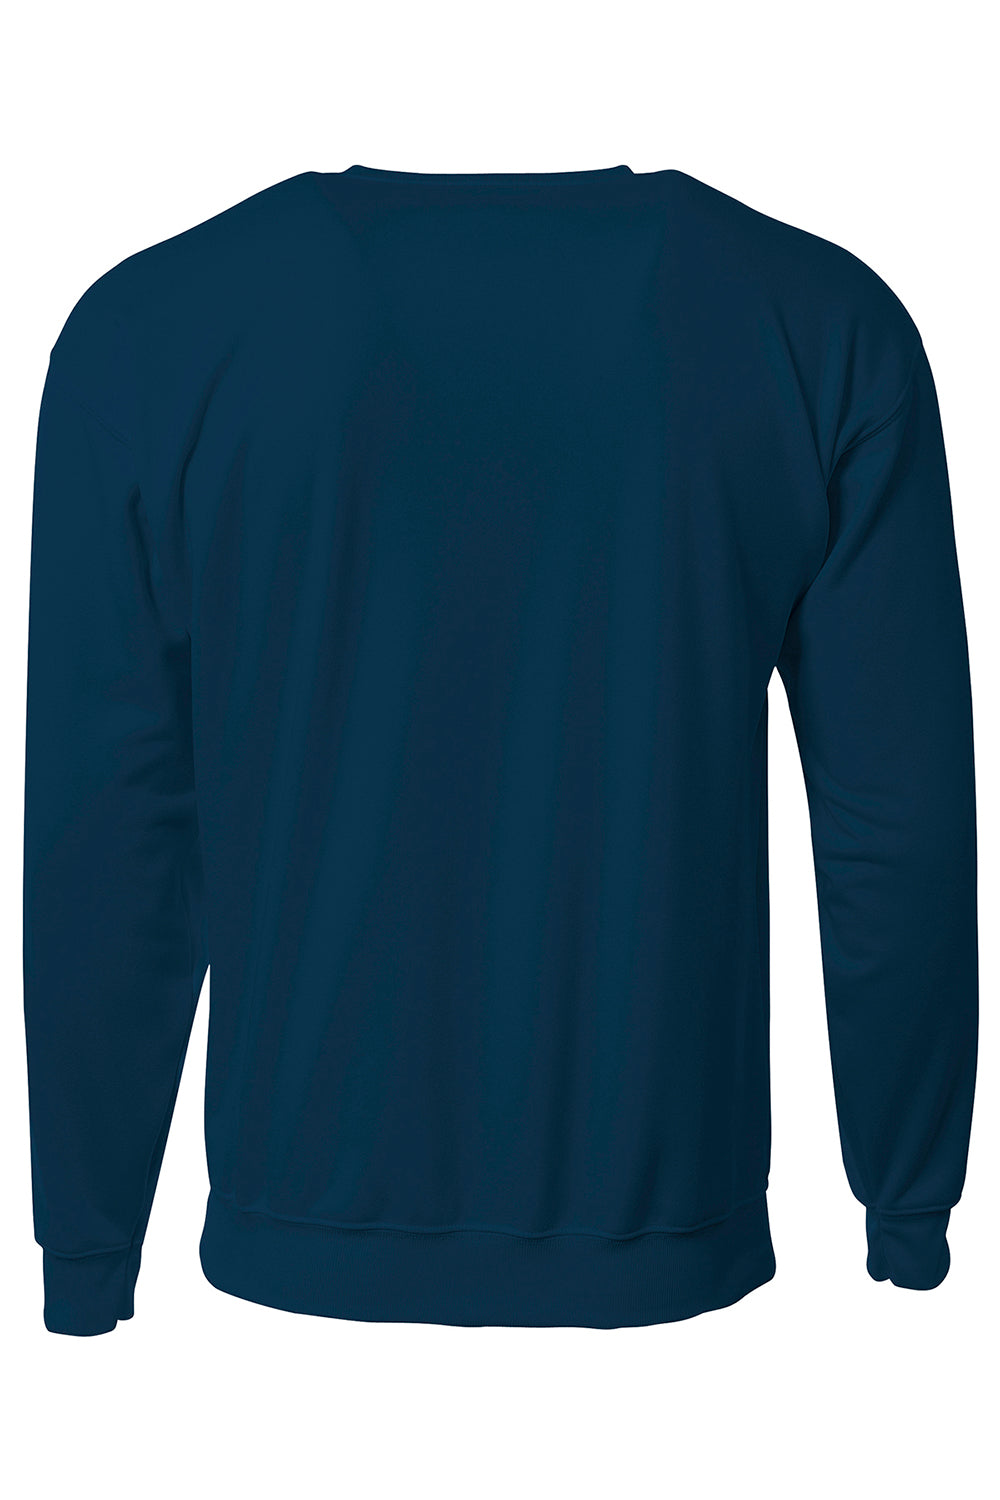 A4 N4275 Mens Sprint Tech Fleece Crewneck Sweatshirt Navy Blue Flat Back